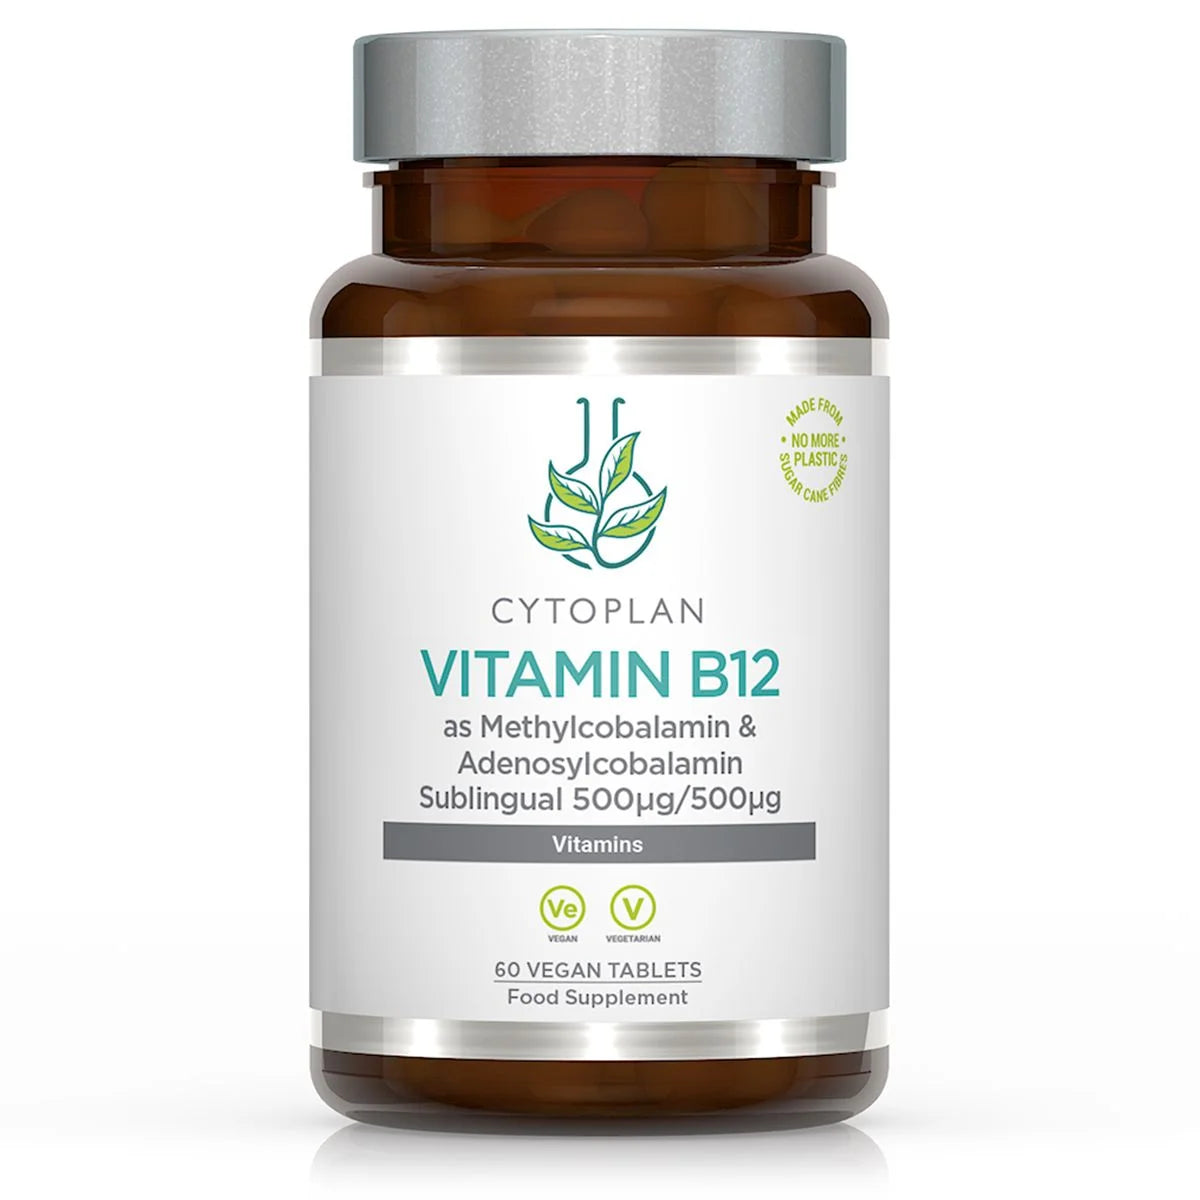 Vitamin B12 sublingual